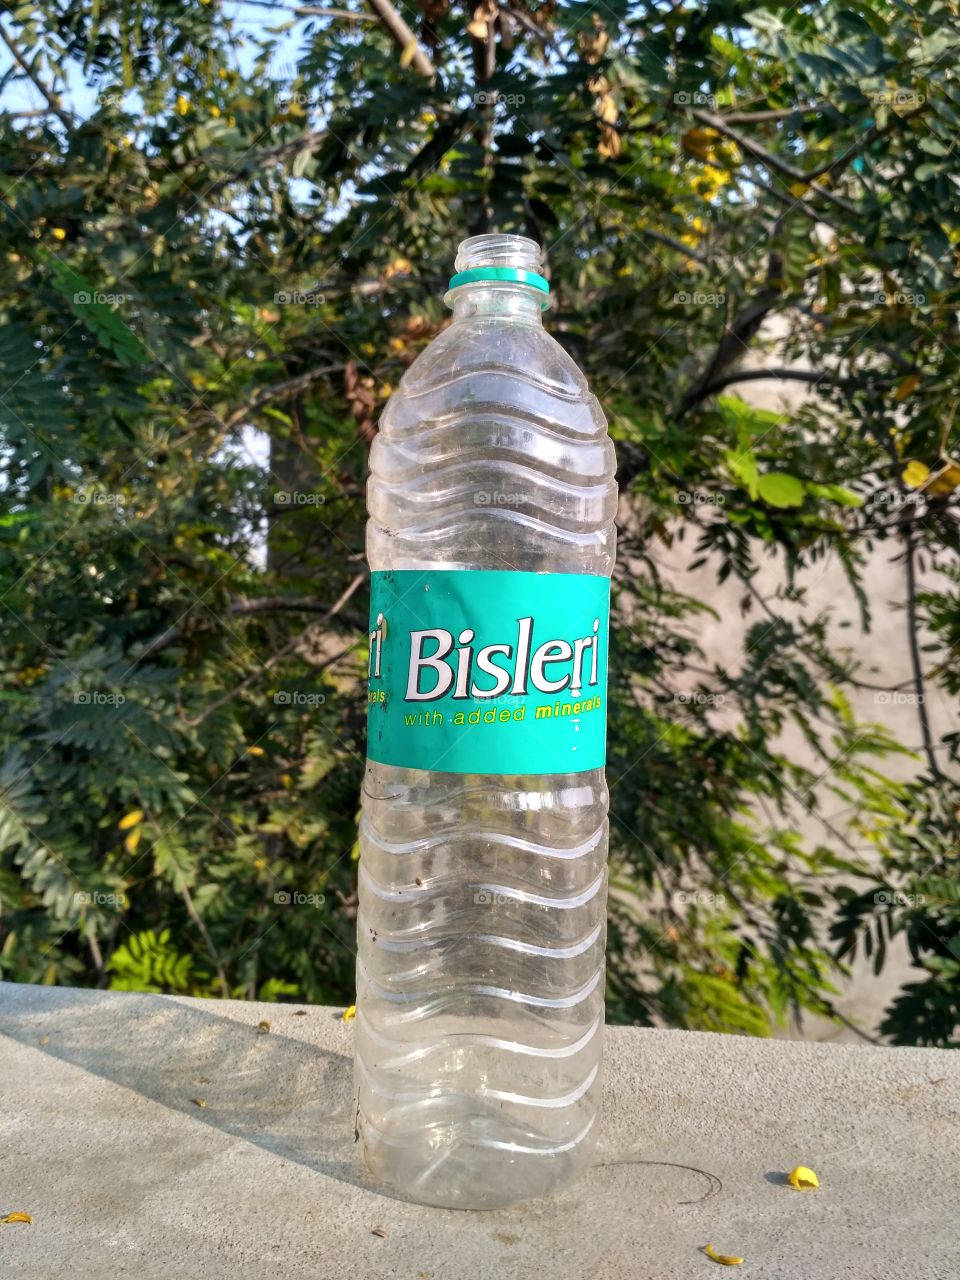 Bisleri bottle of water